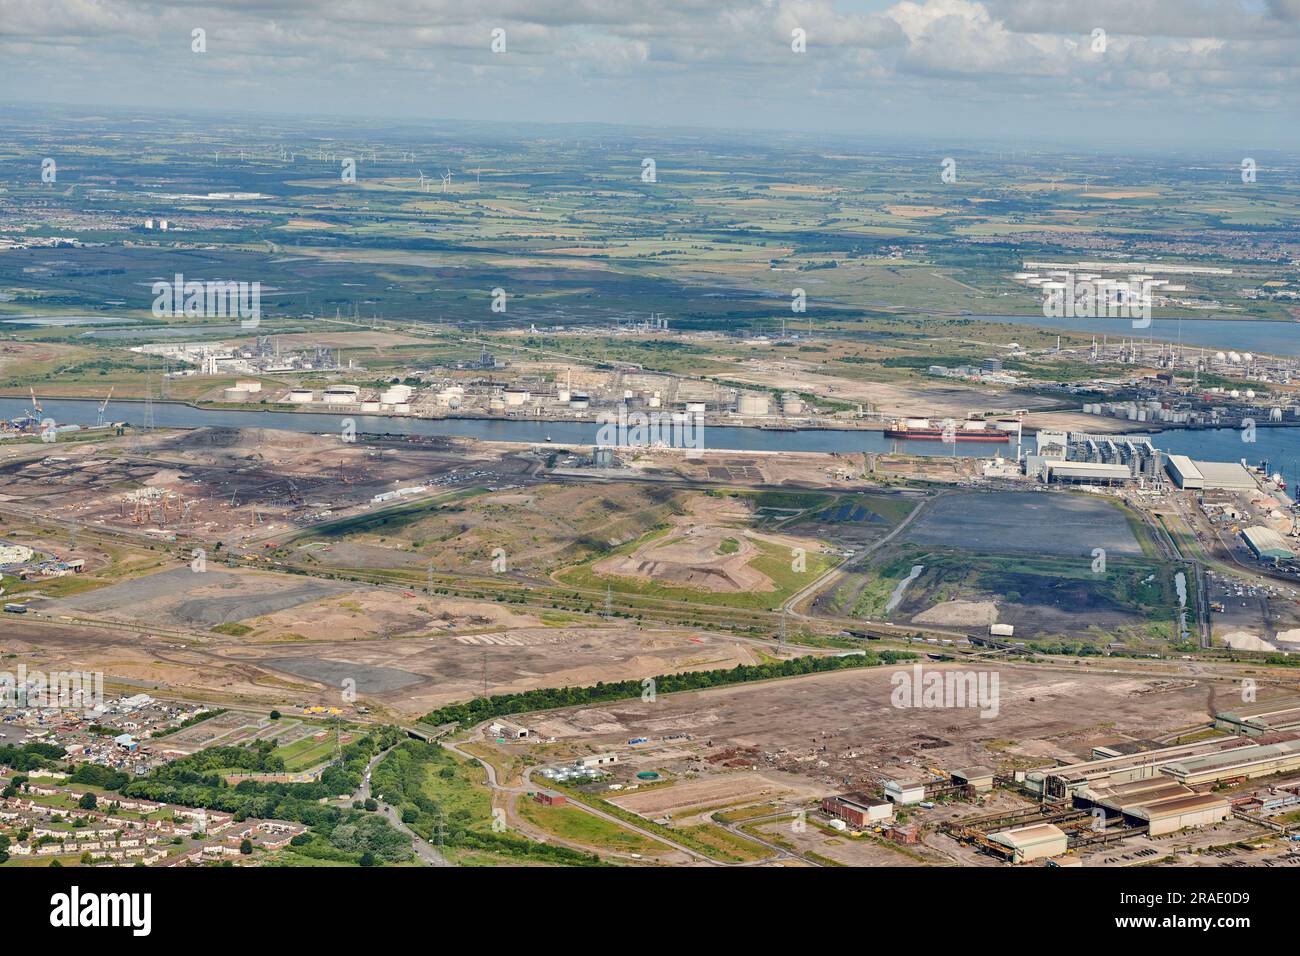 Ein Luftfoto von Teesport, Tees-Mündung, Teeside, Middlesbrough, Nordostengland, UK Stockfoto